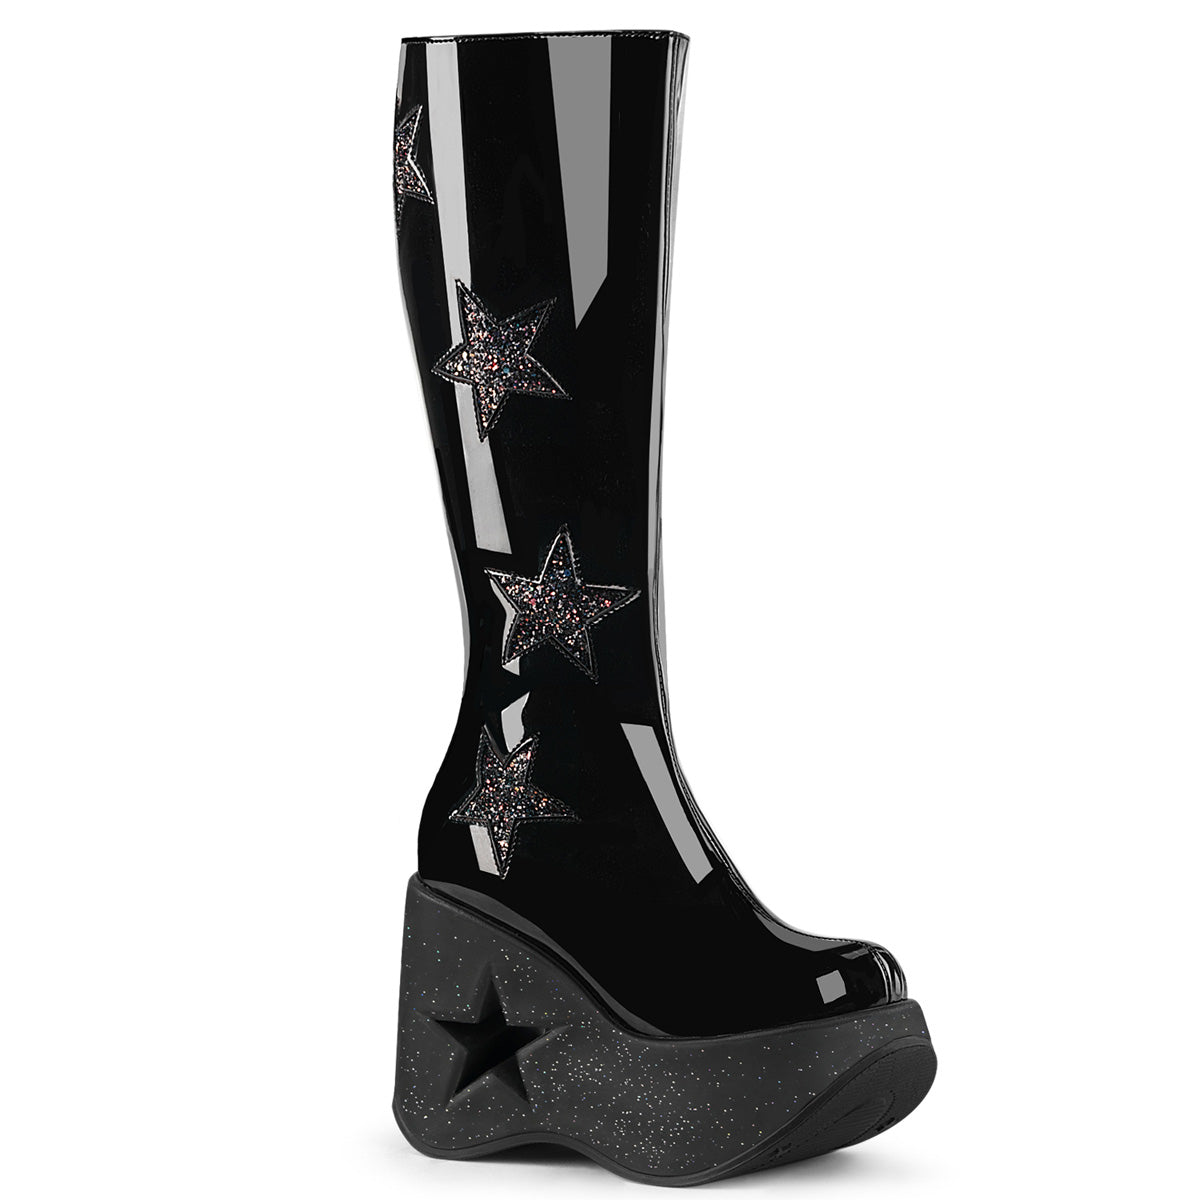 DYNAMITE-218 Alternative Footwear Demonia Women's Mid-Calf & Knee High Boots Blk Pat-Blk Multi Glitter